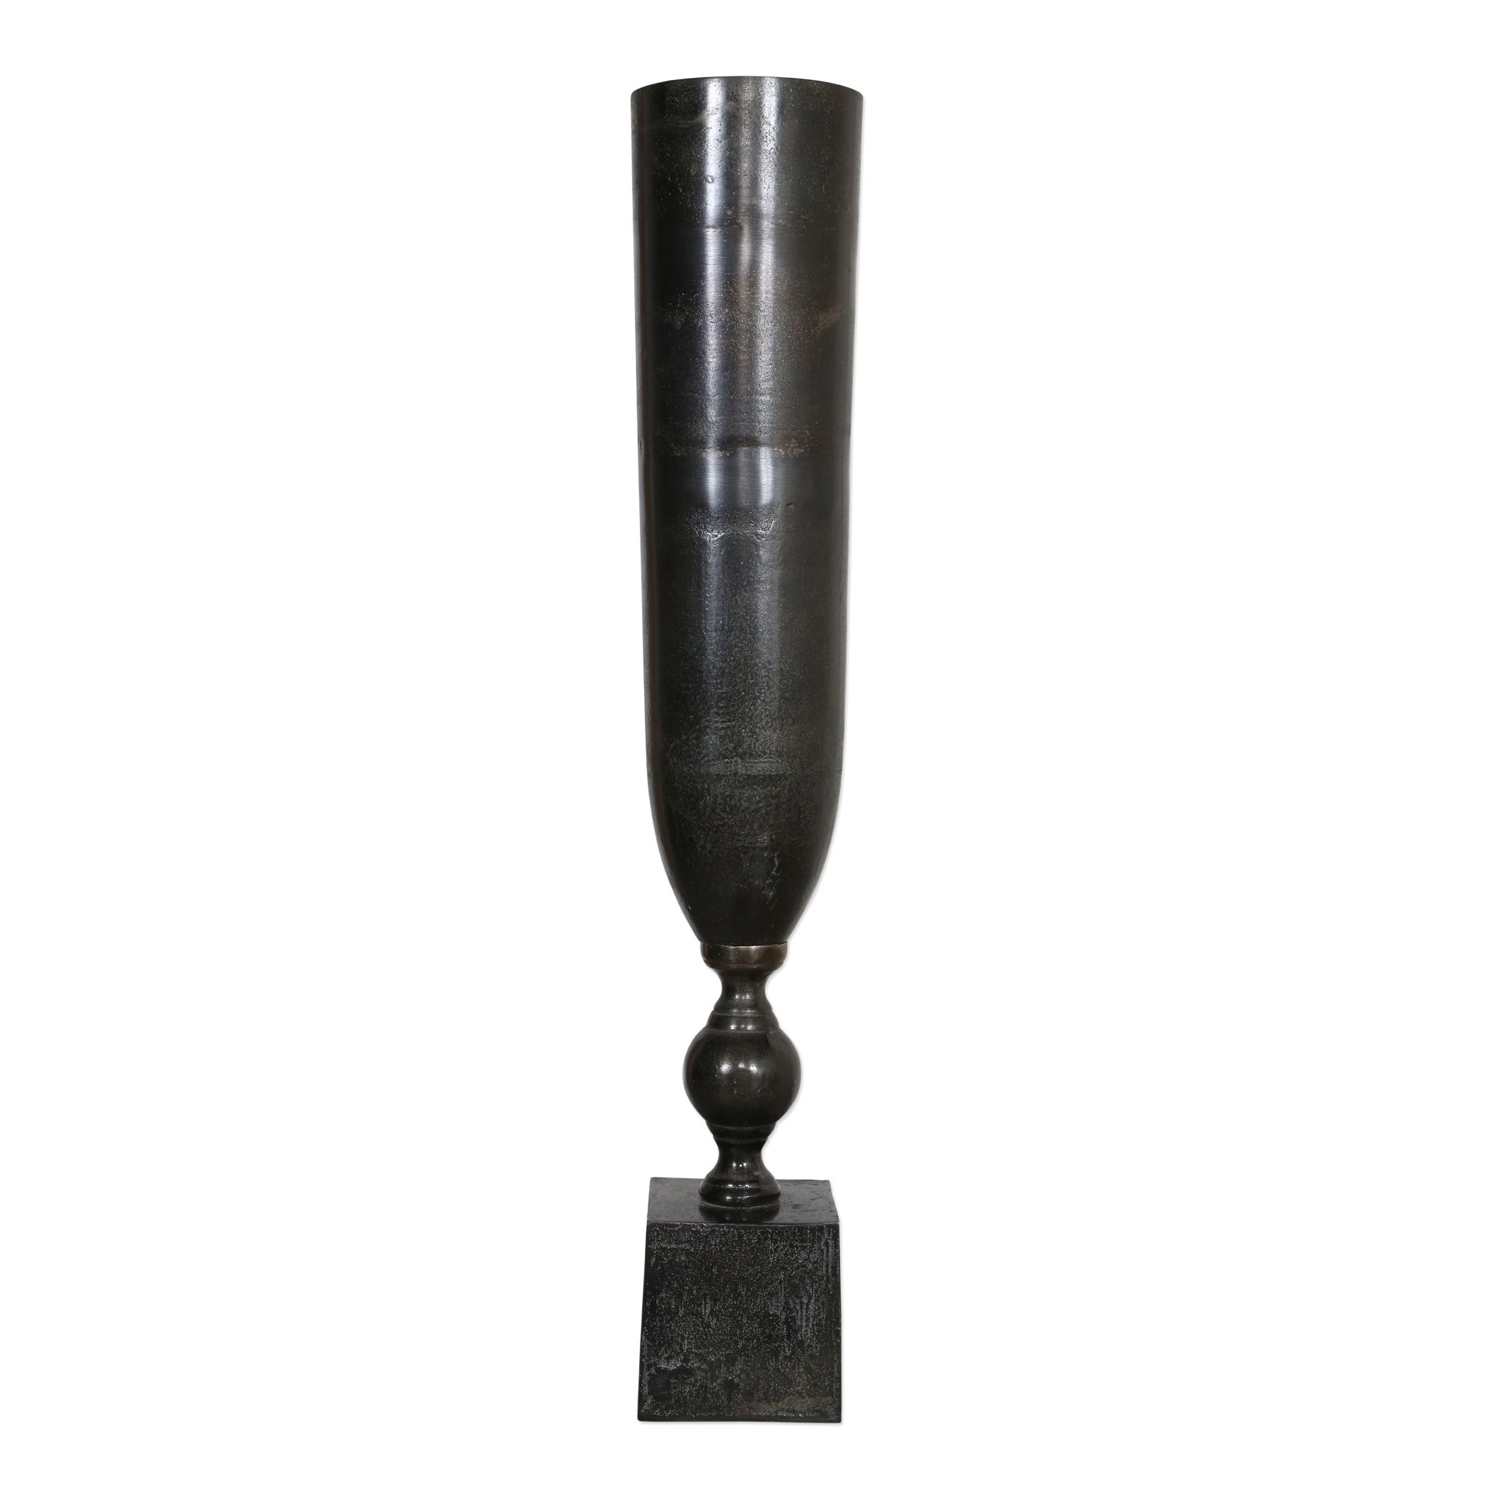 Uttermost Kaylie Vase - Black Nickel